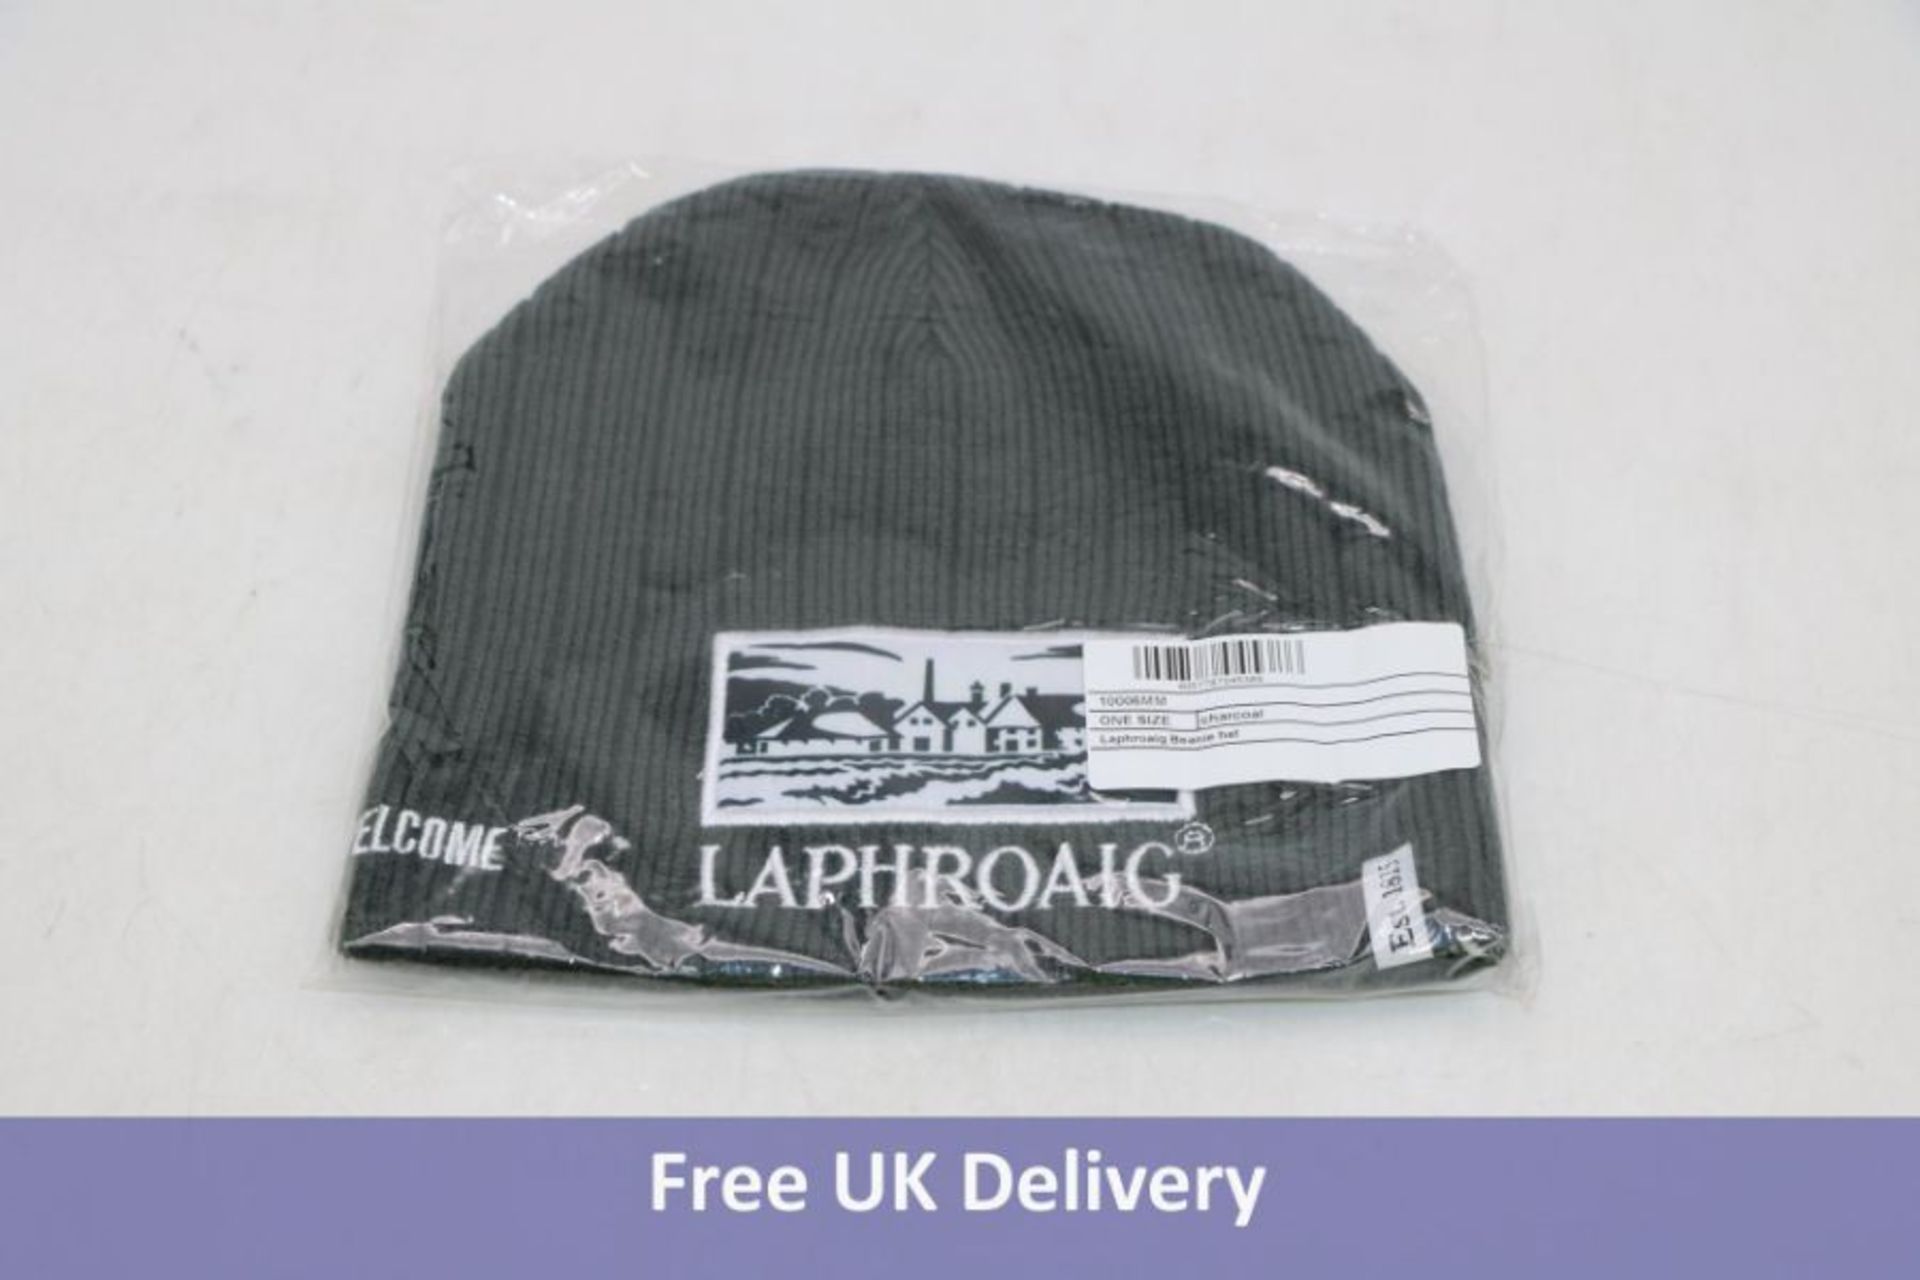 Ten Laphroaig Reversible Beanie Hats, Dark Grey/White